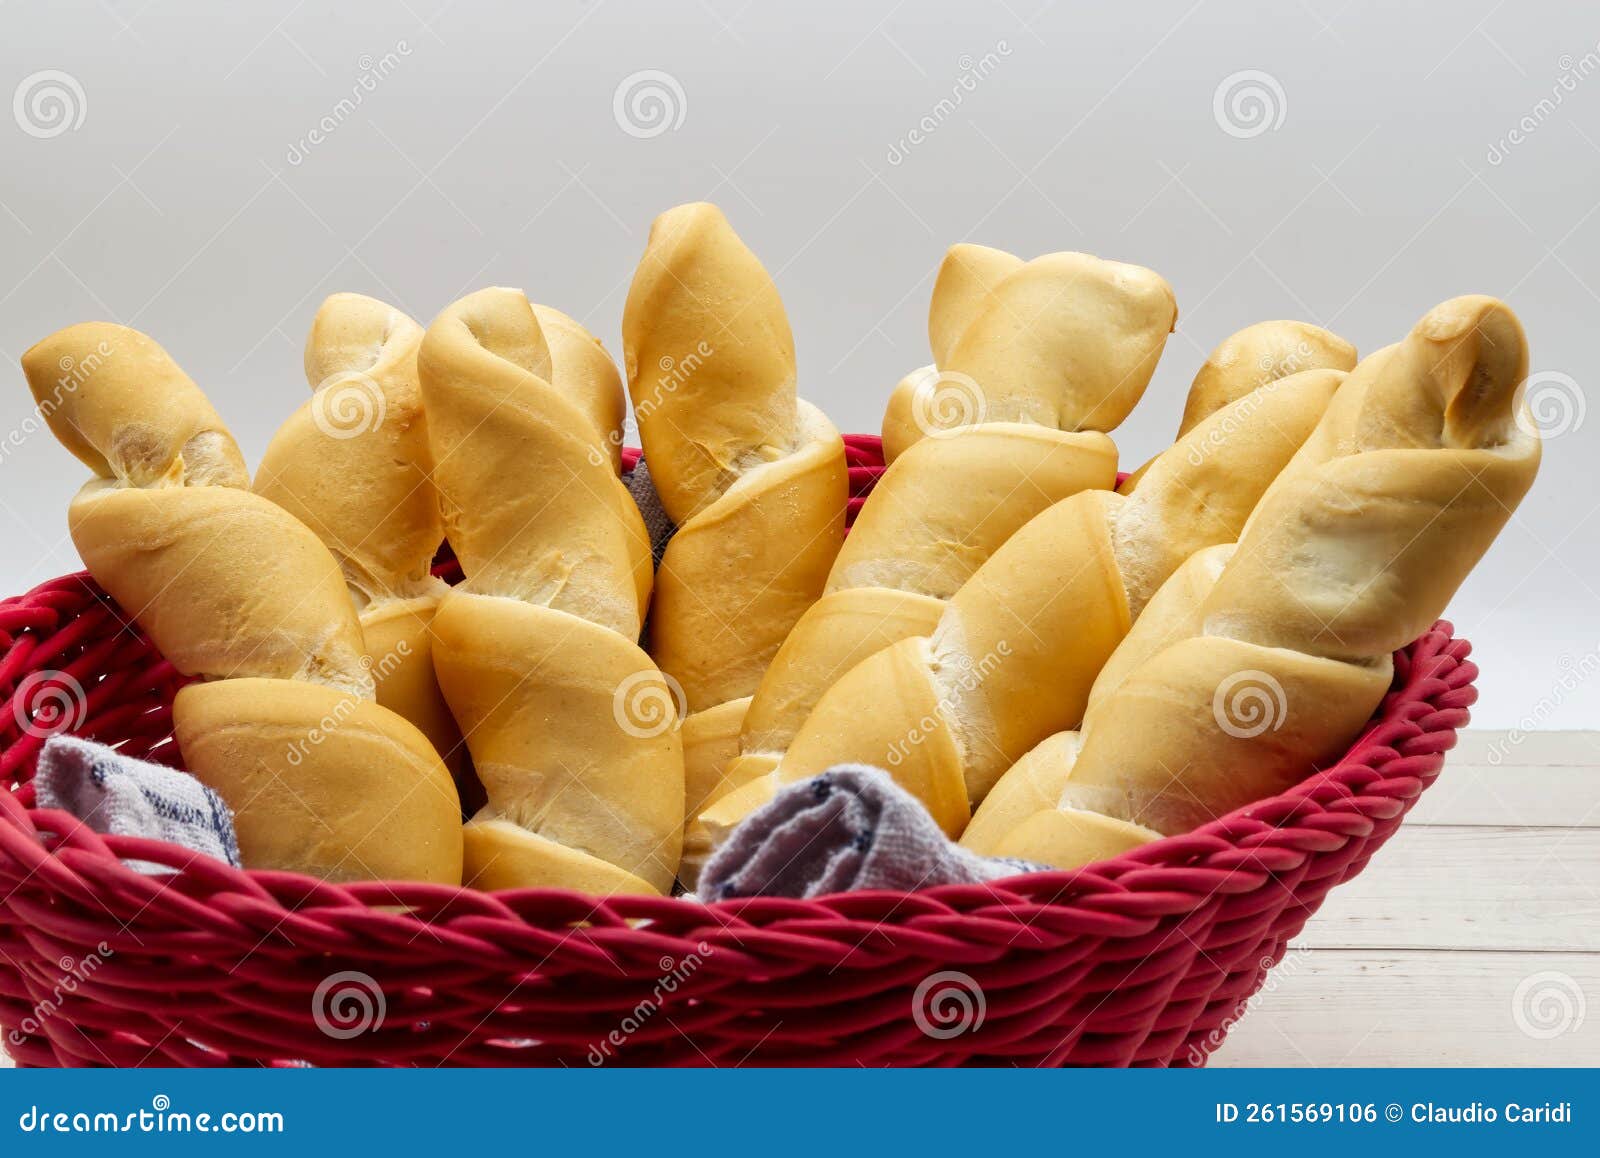 italian bread crocetta ferrarese. traditional bread from ferrara. italy